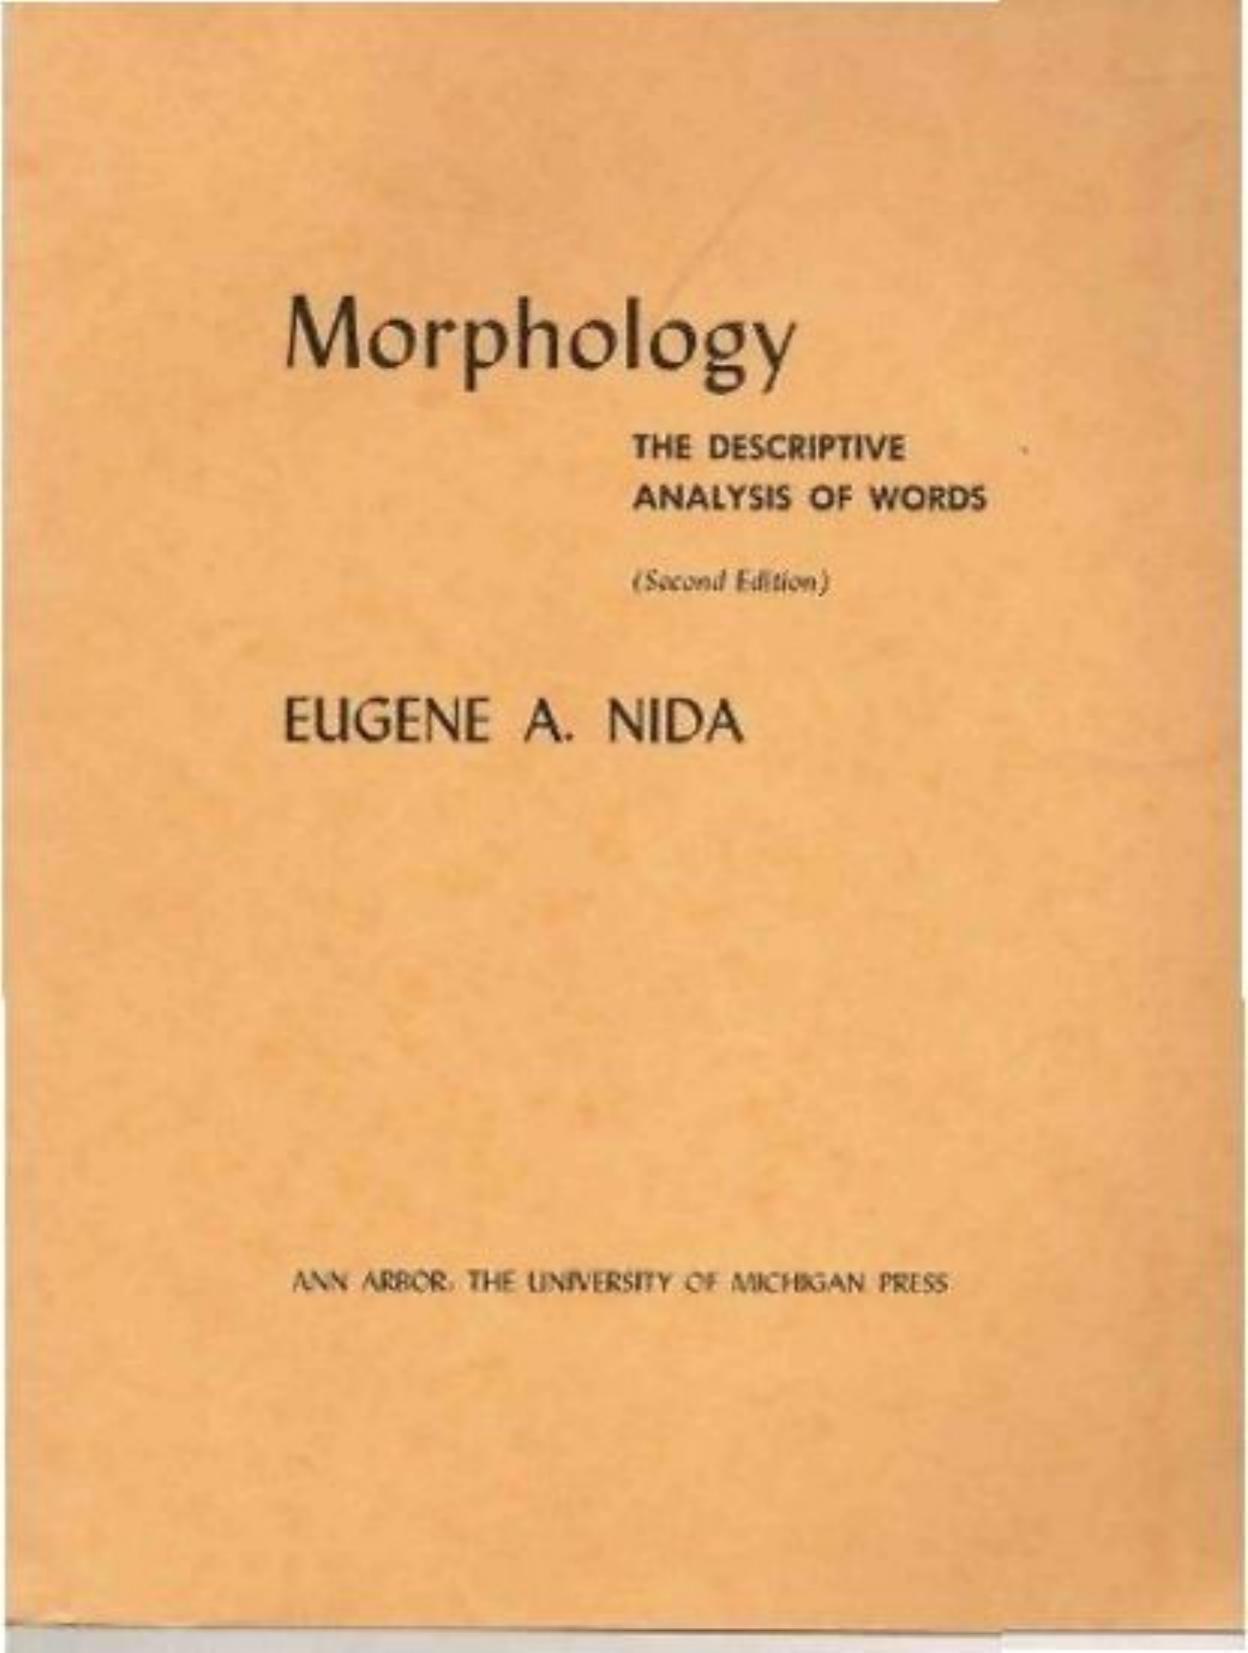 Morphology: The Descriptive Analysis of Words